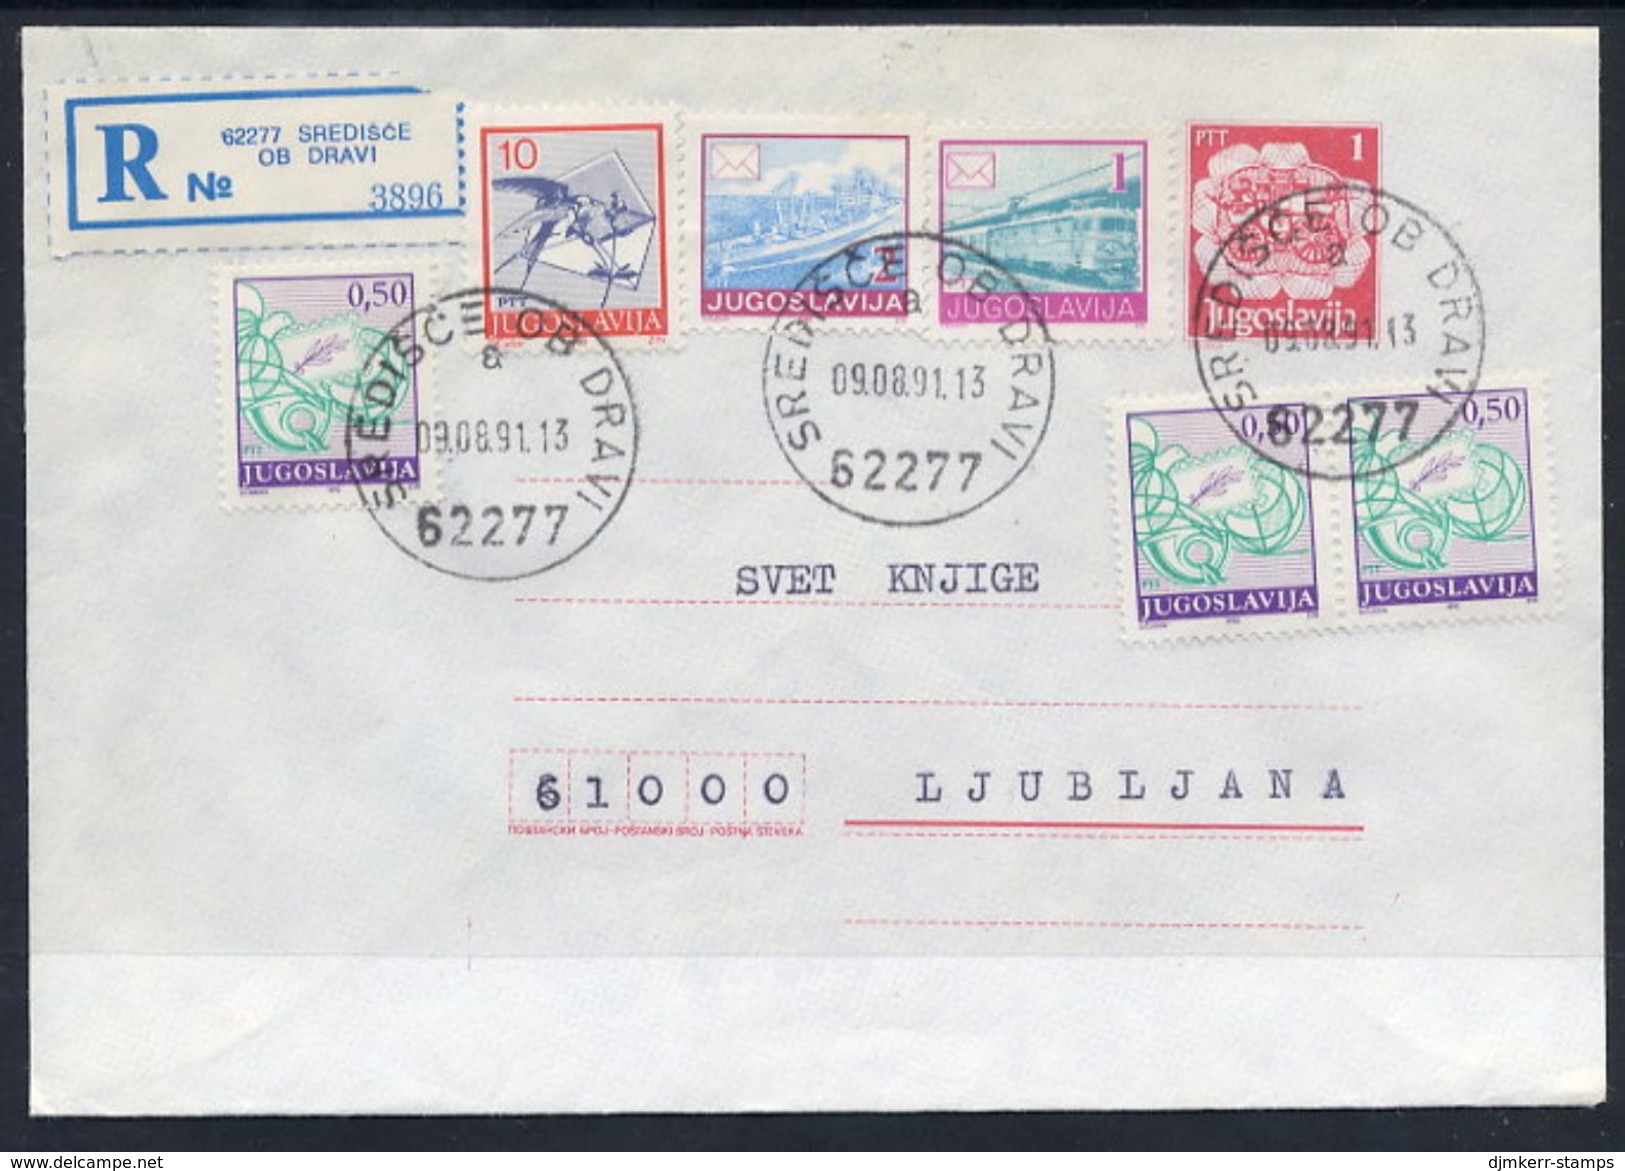 YUGOSLAVIA 1990 Mailcoach 1 D. Stationery Envelope Used With Additional Franking.  Michel U95 - Ganzsachen